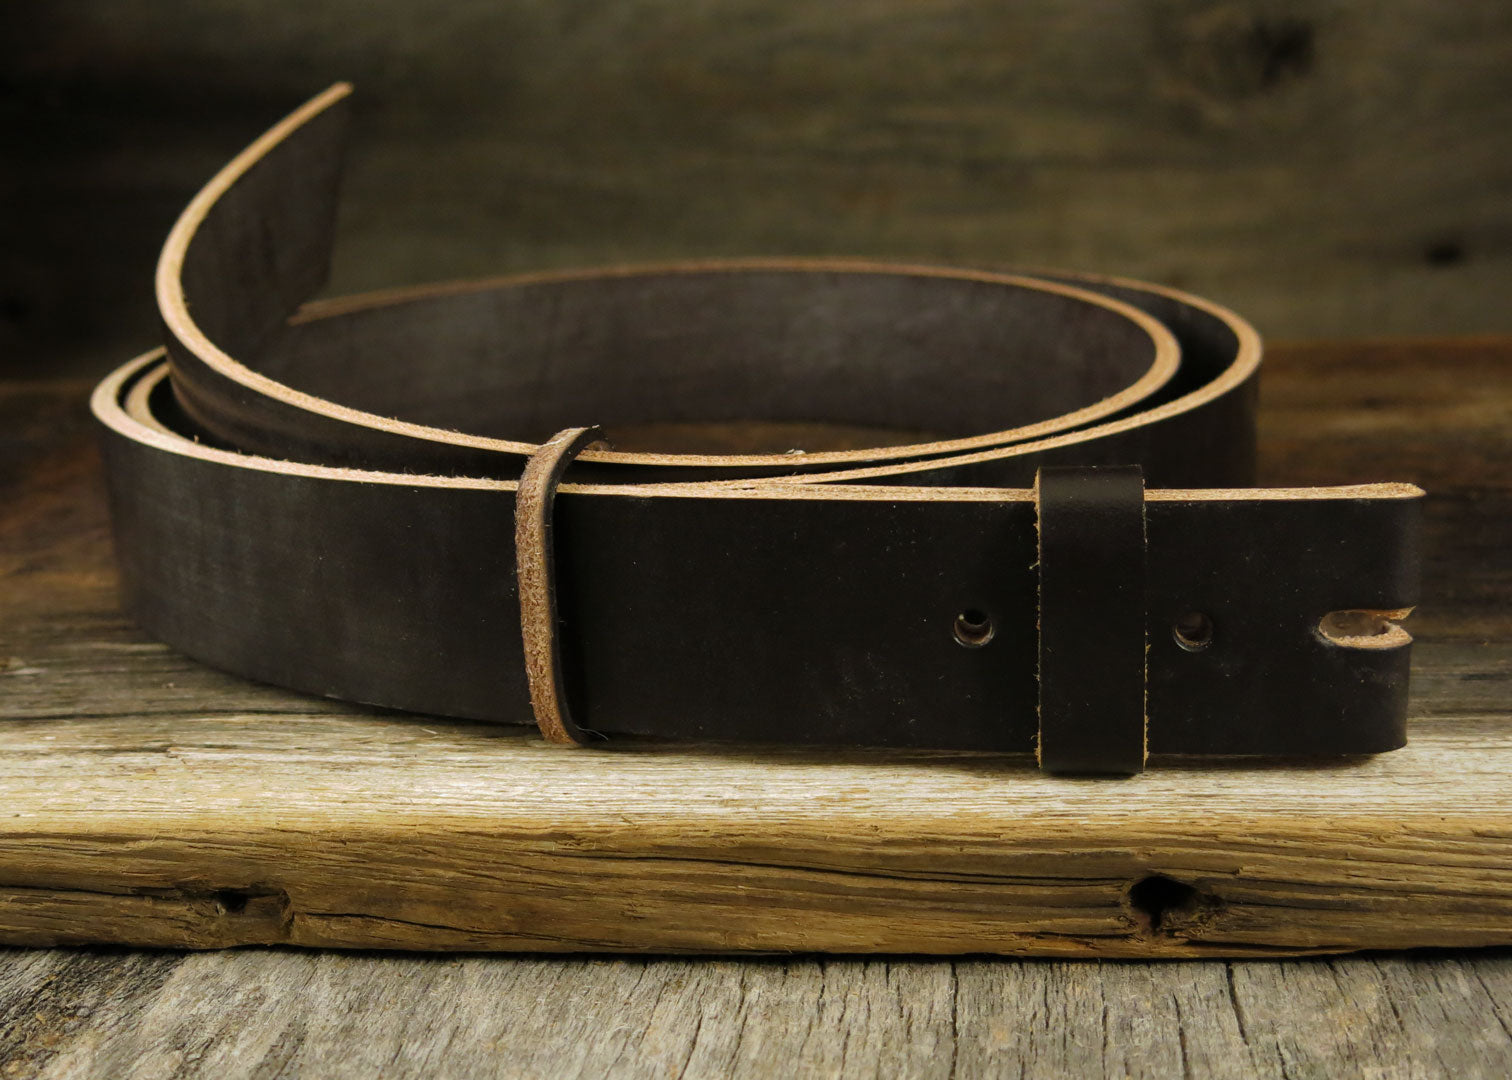 Sedgwick Traditonal English Bridle Leather - Havana Brown - Rein Weight 10-12 oz - VegTan  - 65"+  Inches Long